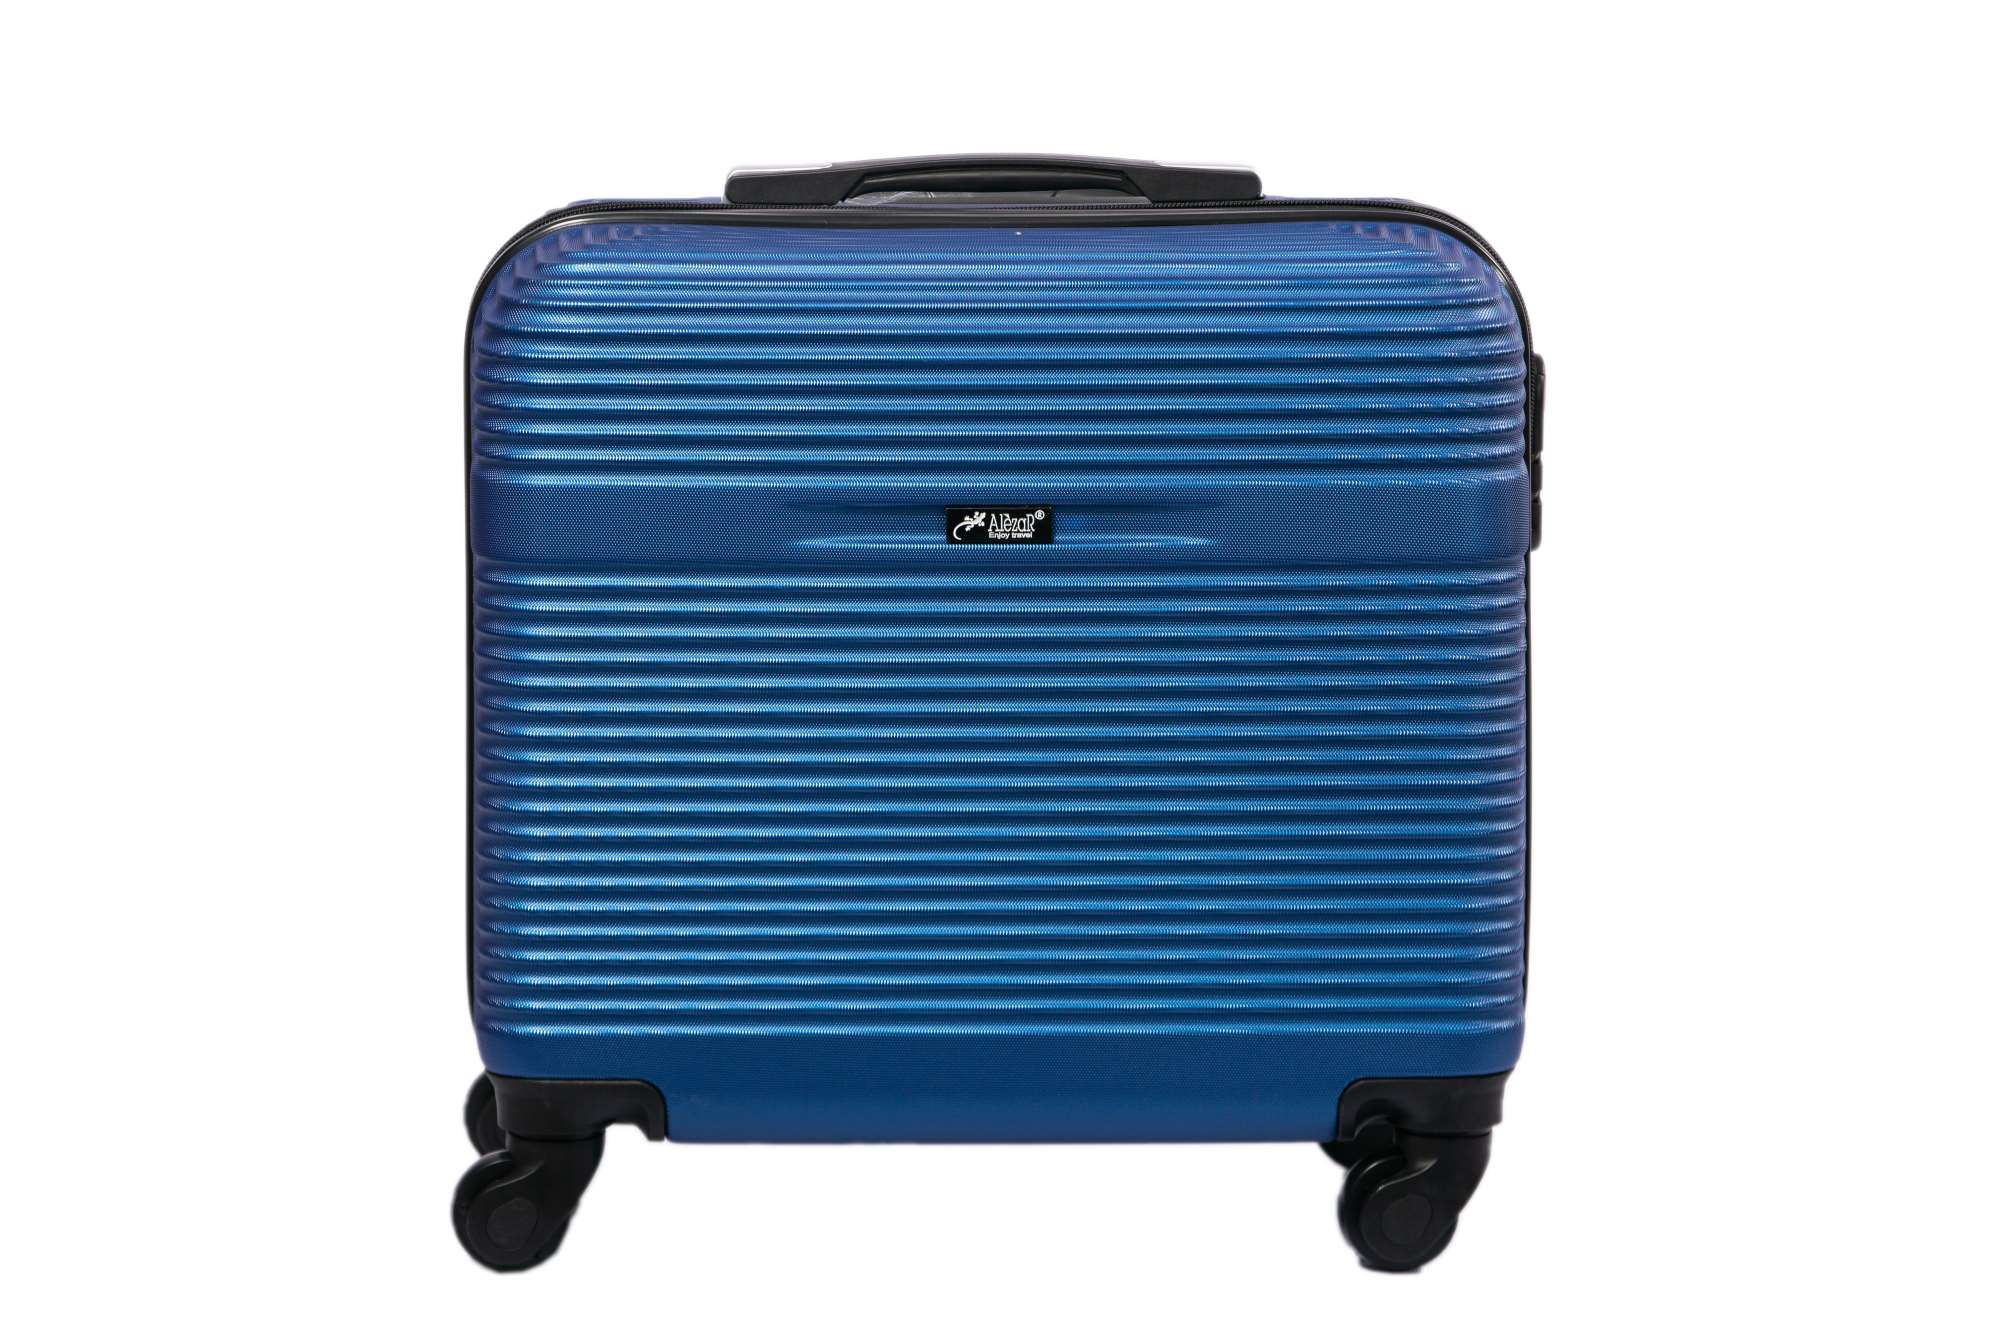 Alezar Cabin Size Travel Bag Blue 18